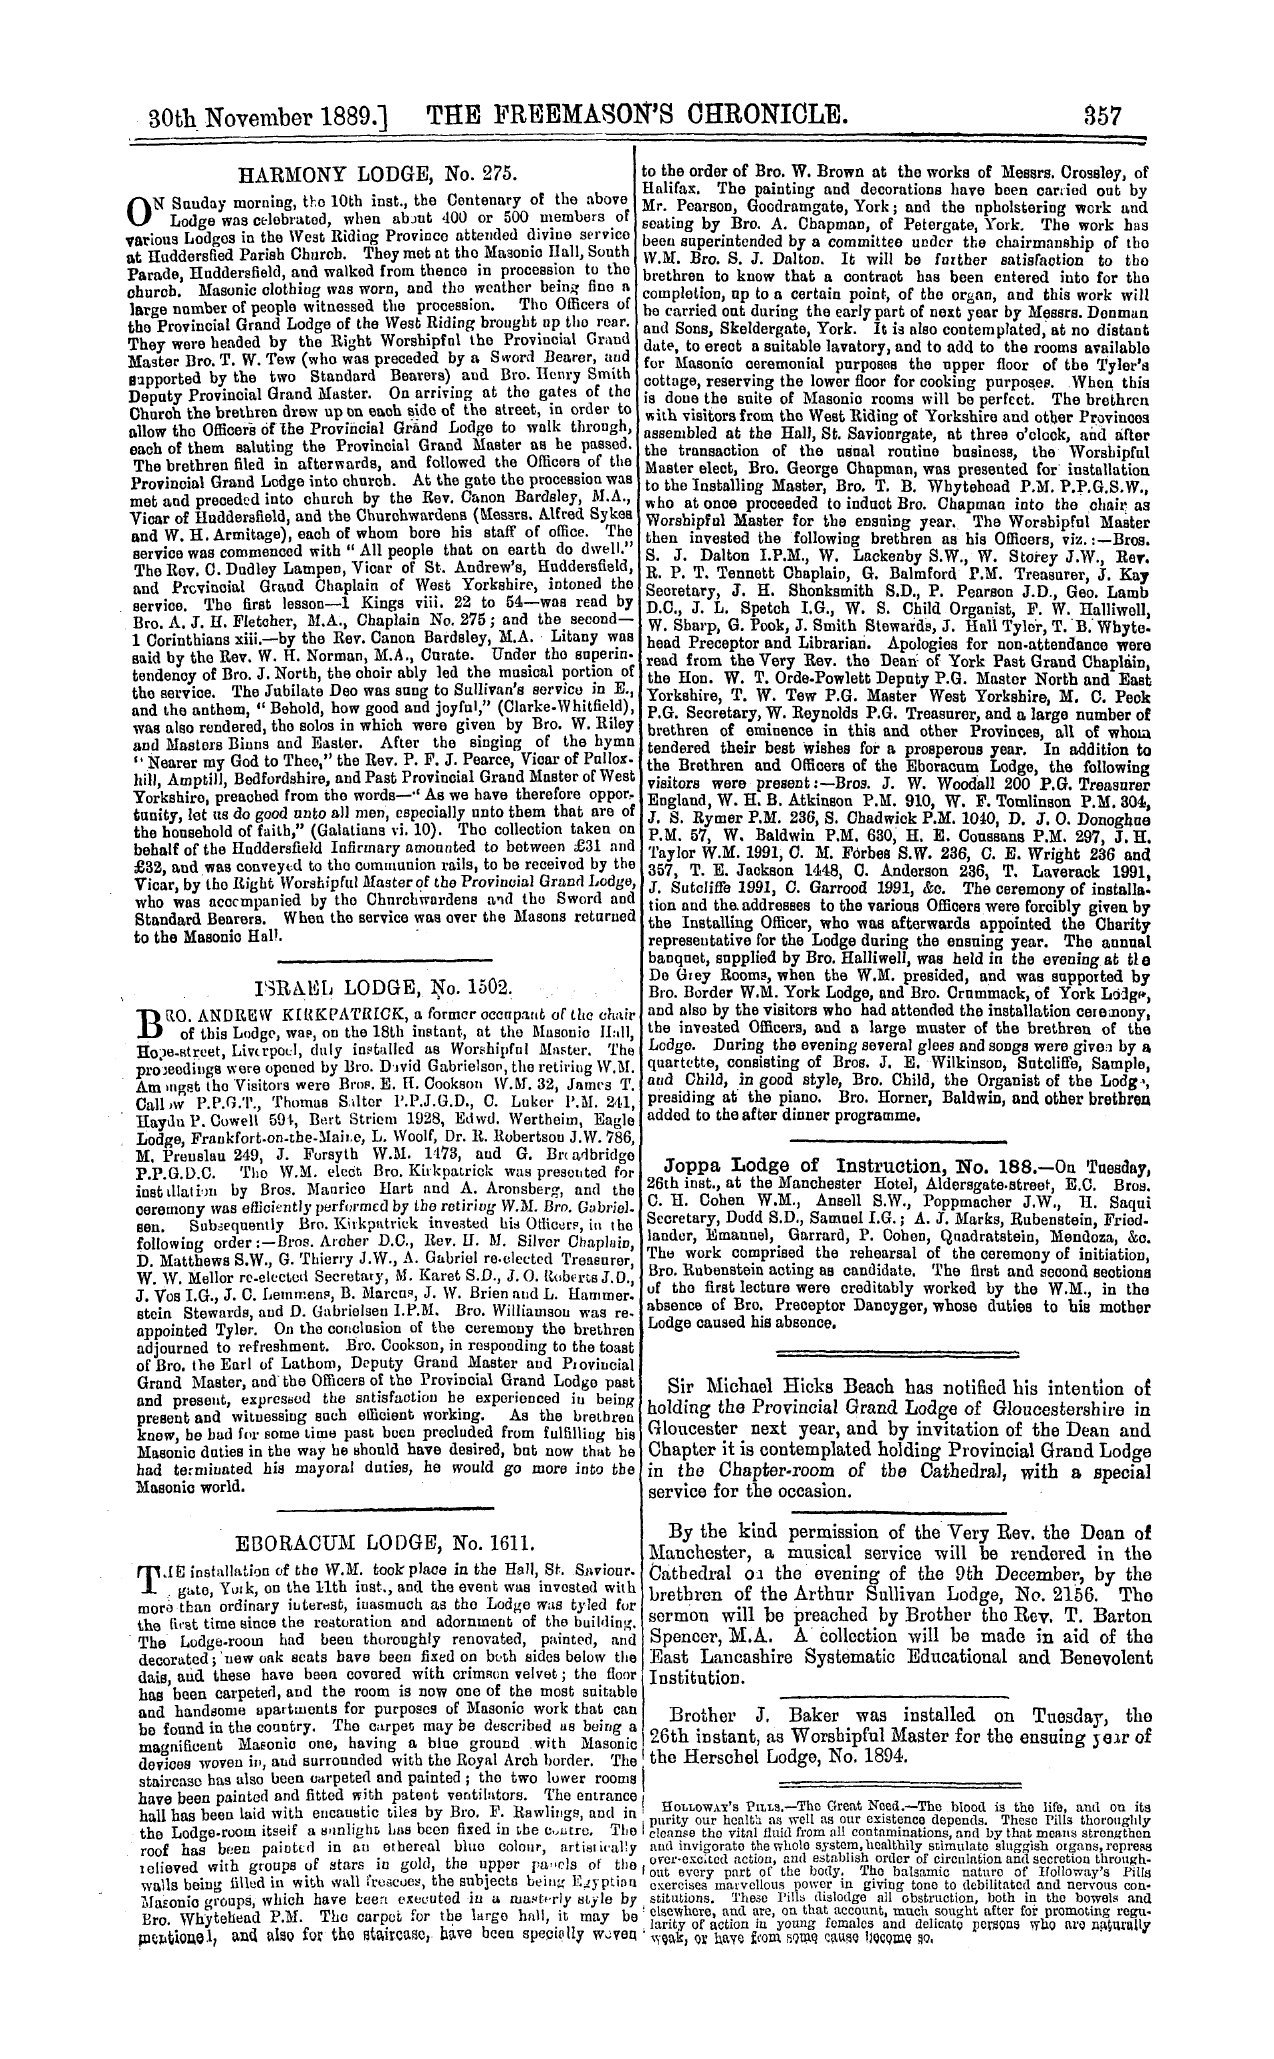 The Freemason's Chronicle: 1889-11-30: 5